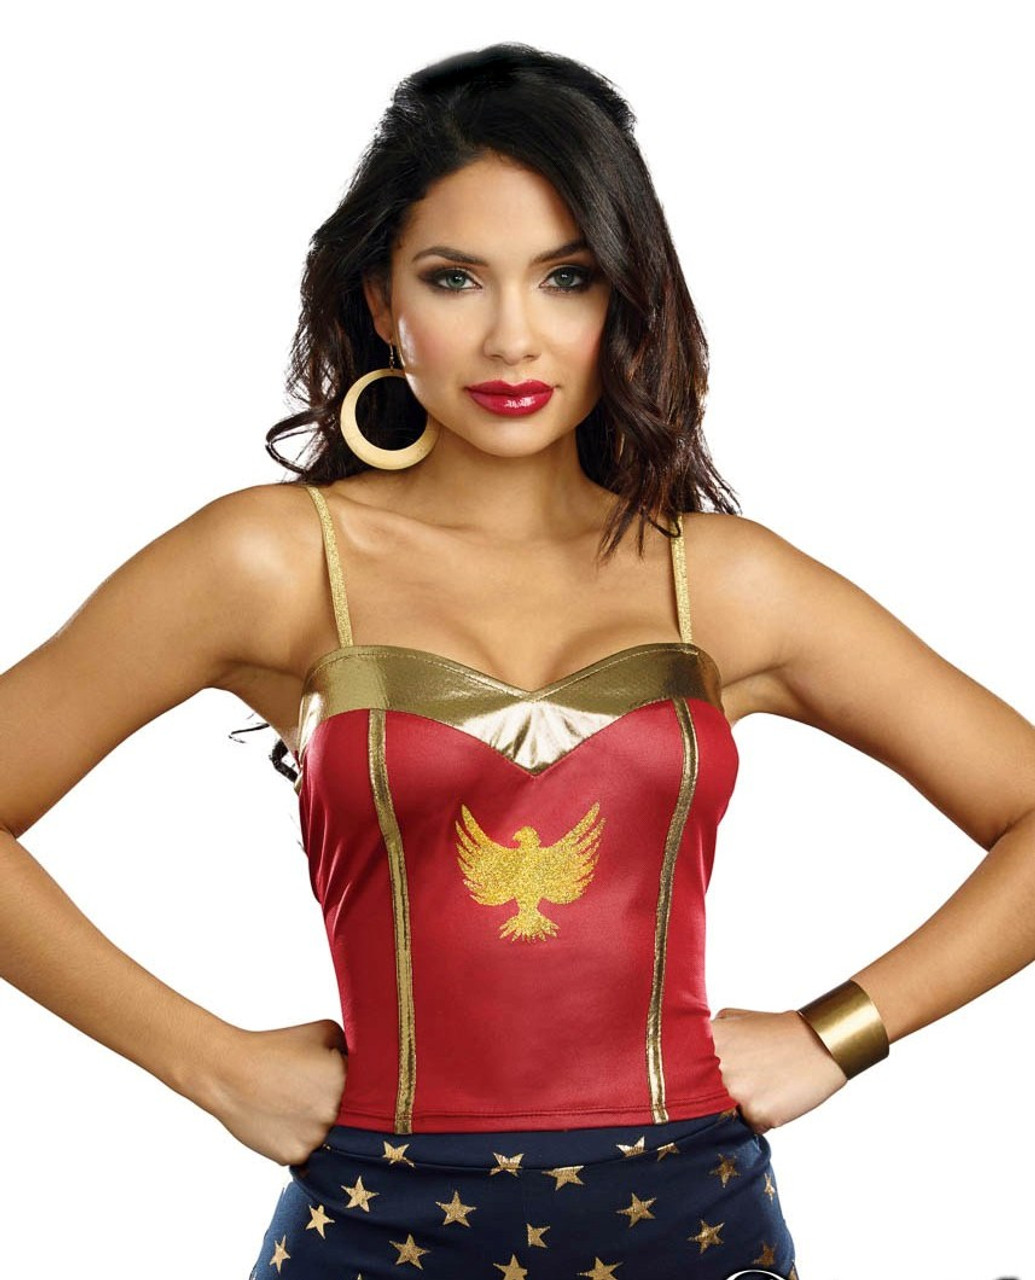 Sexy Wonder Woman Costume 